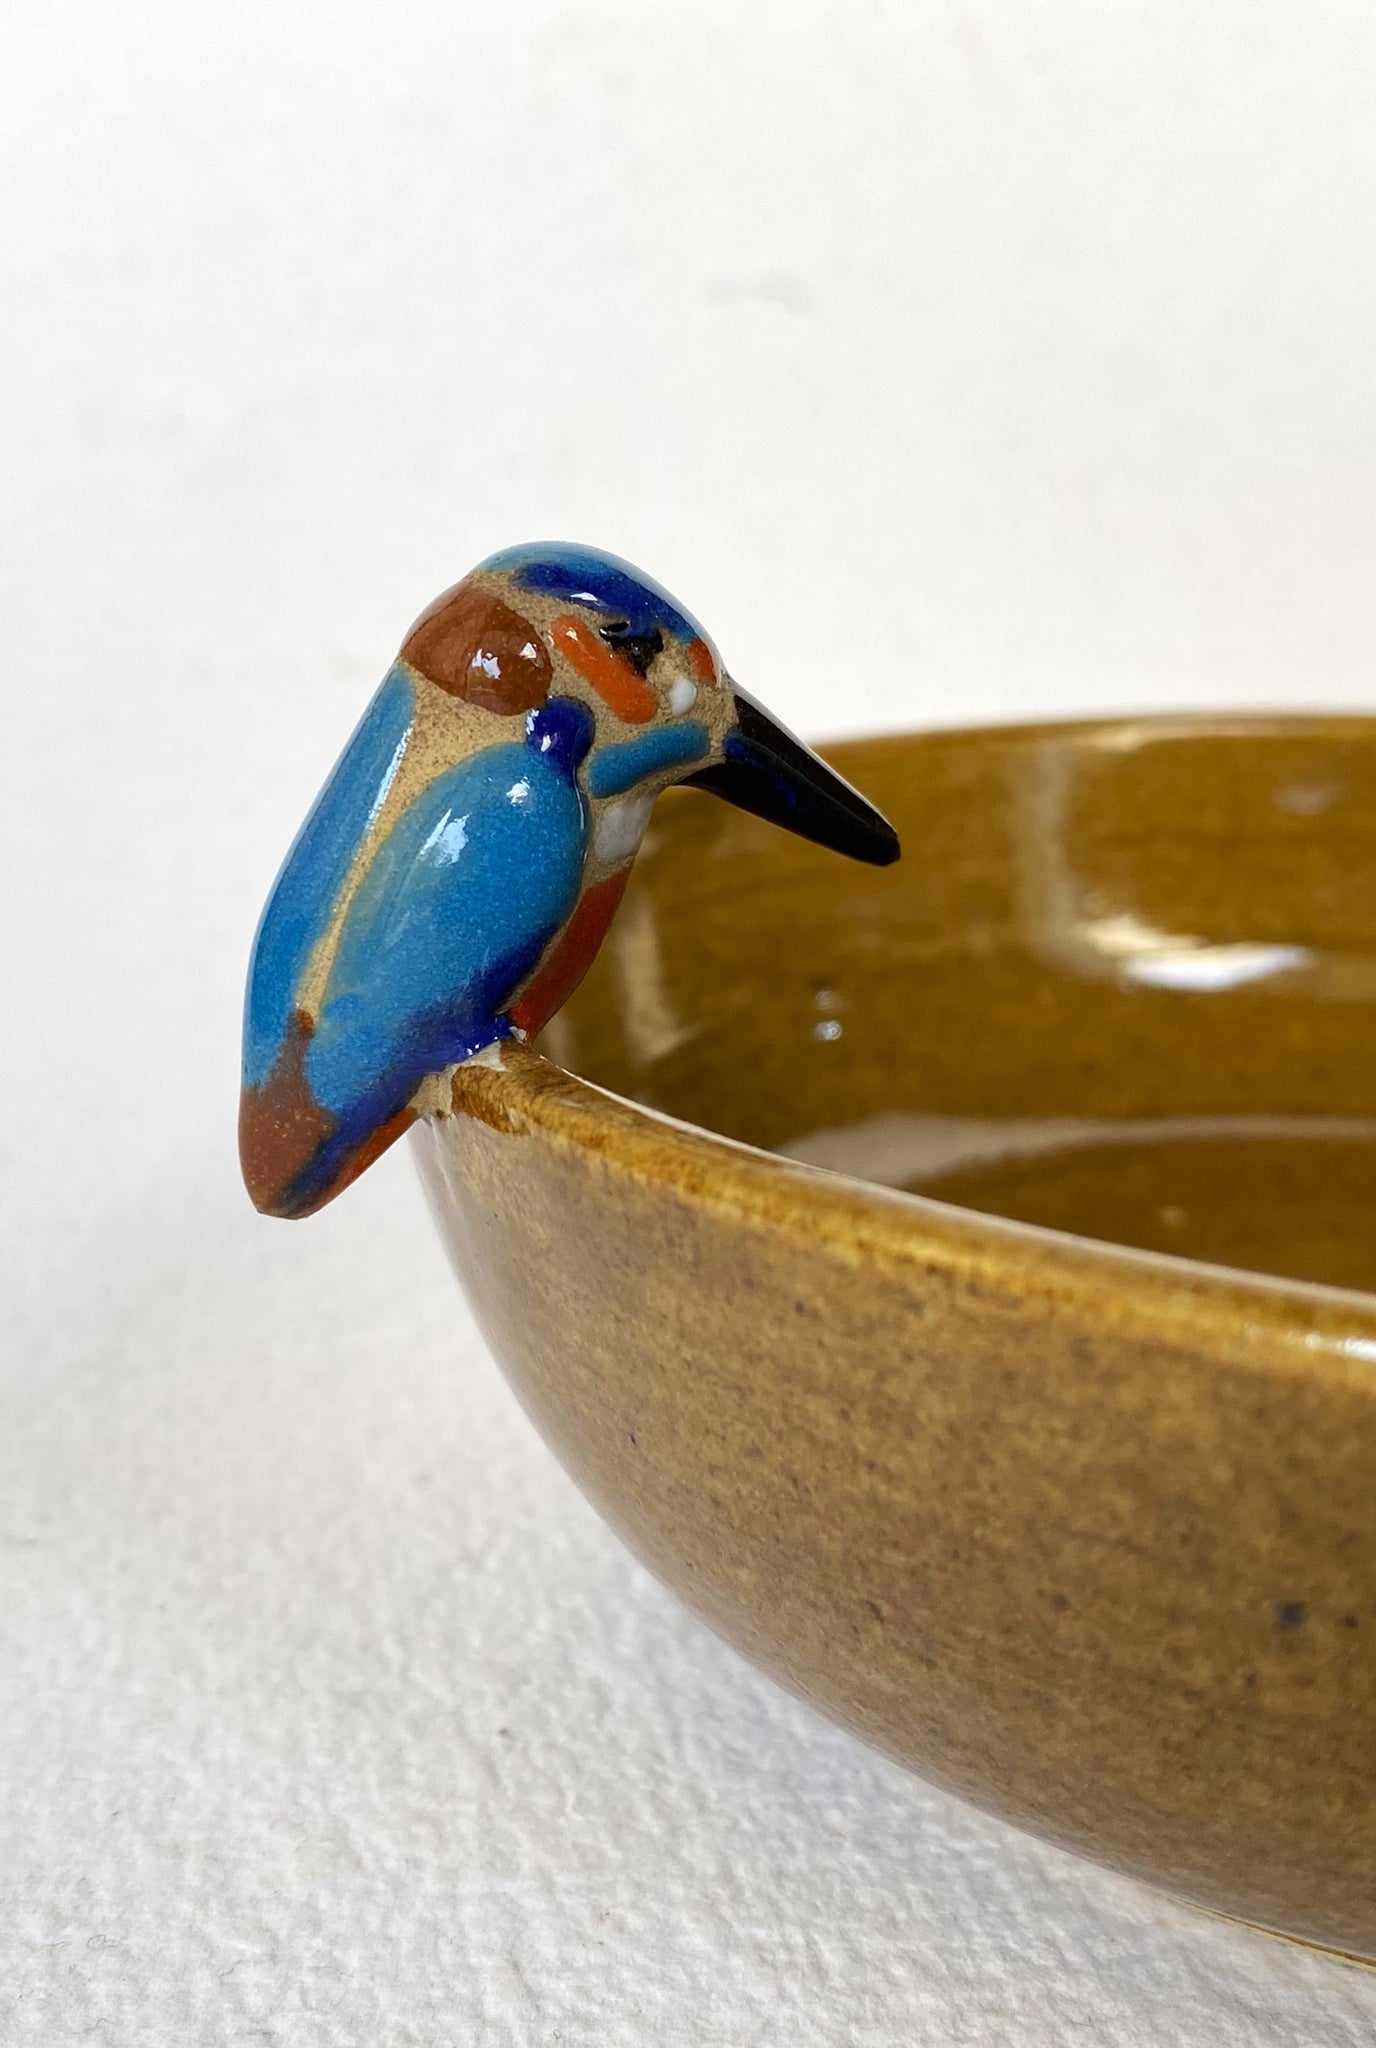 decor-handcrafted-ceramic-handpainted-Bowl- kingfisher